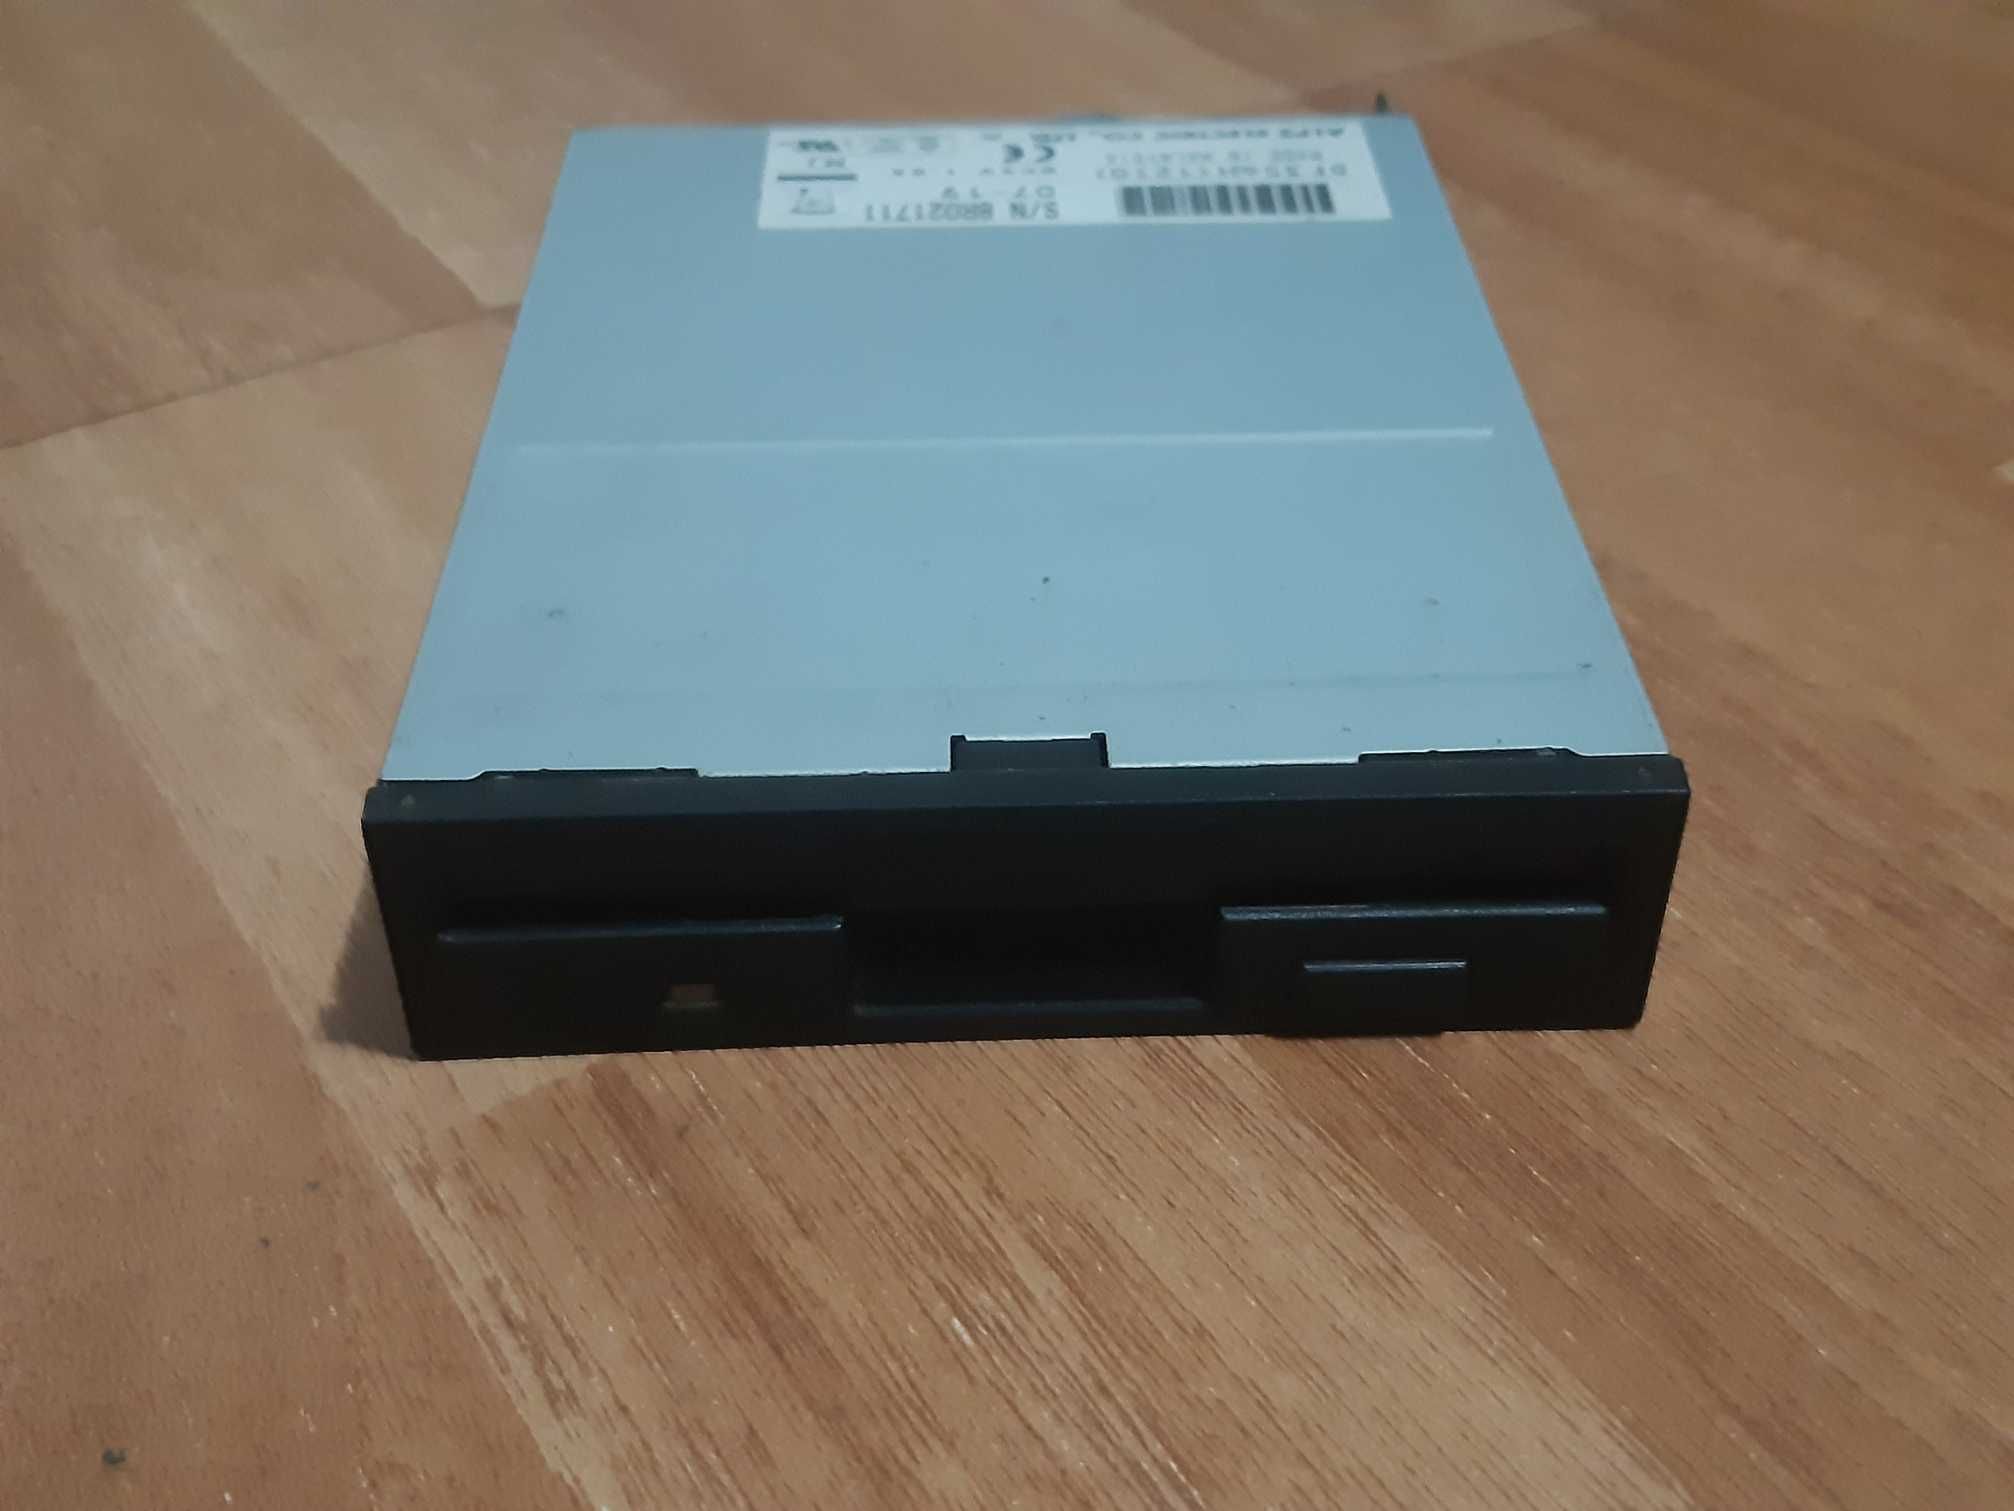 ALPS DF354H (121G) 1.44MB 3.5" Floppy Drive